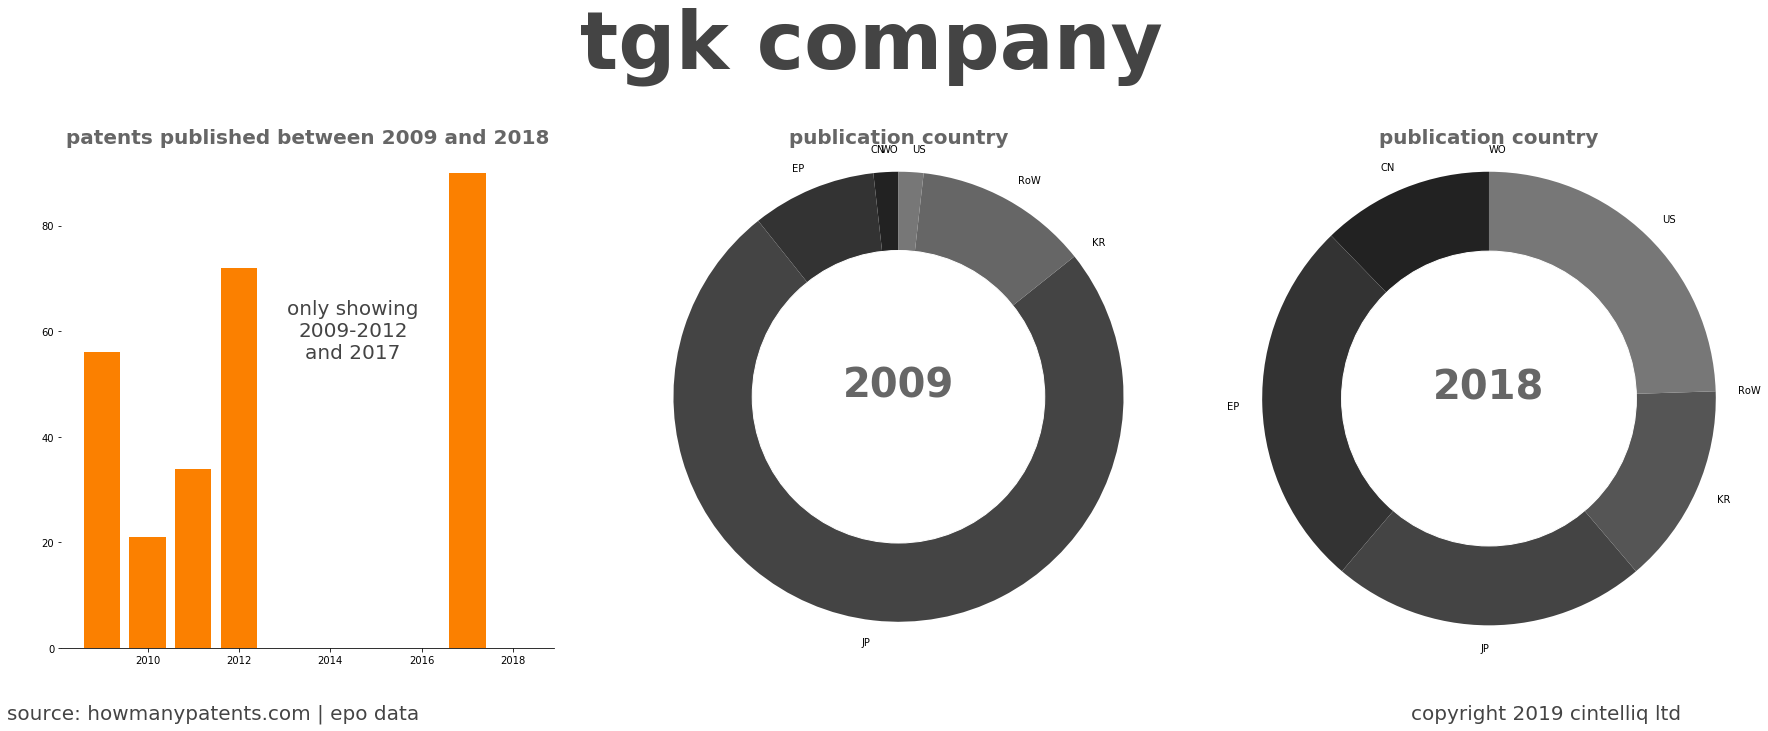 summary of patents for Tgk Company